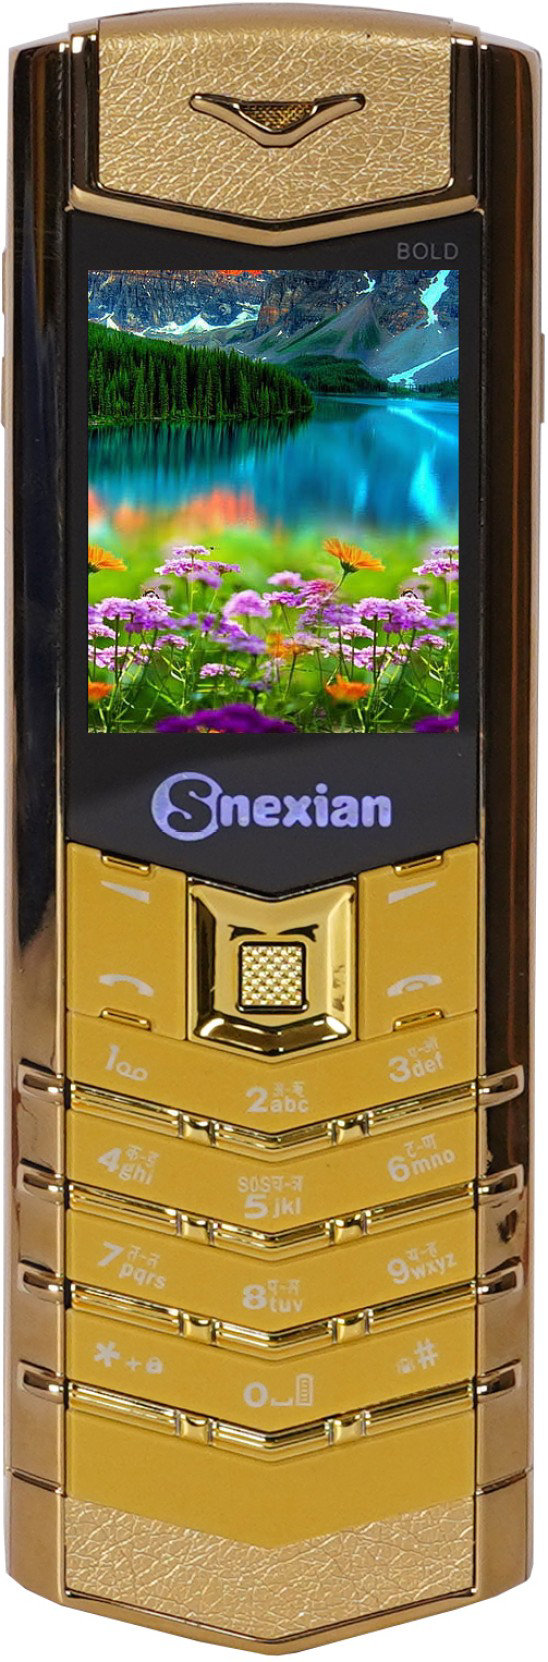 Snexian vertu button vartu dual sim phone - Brown